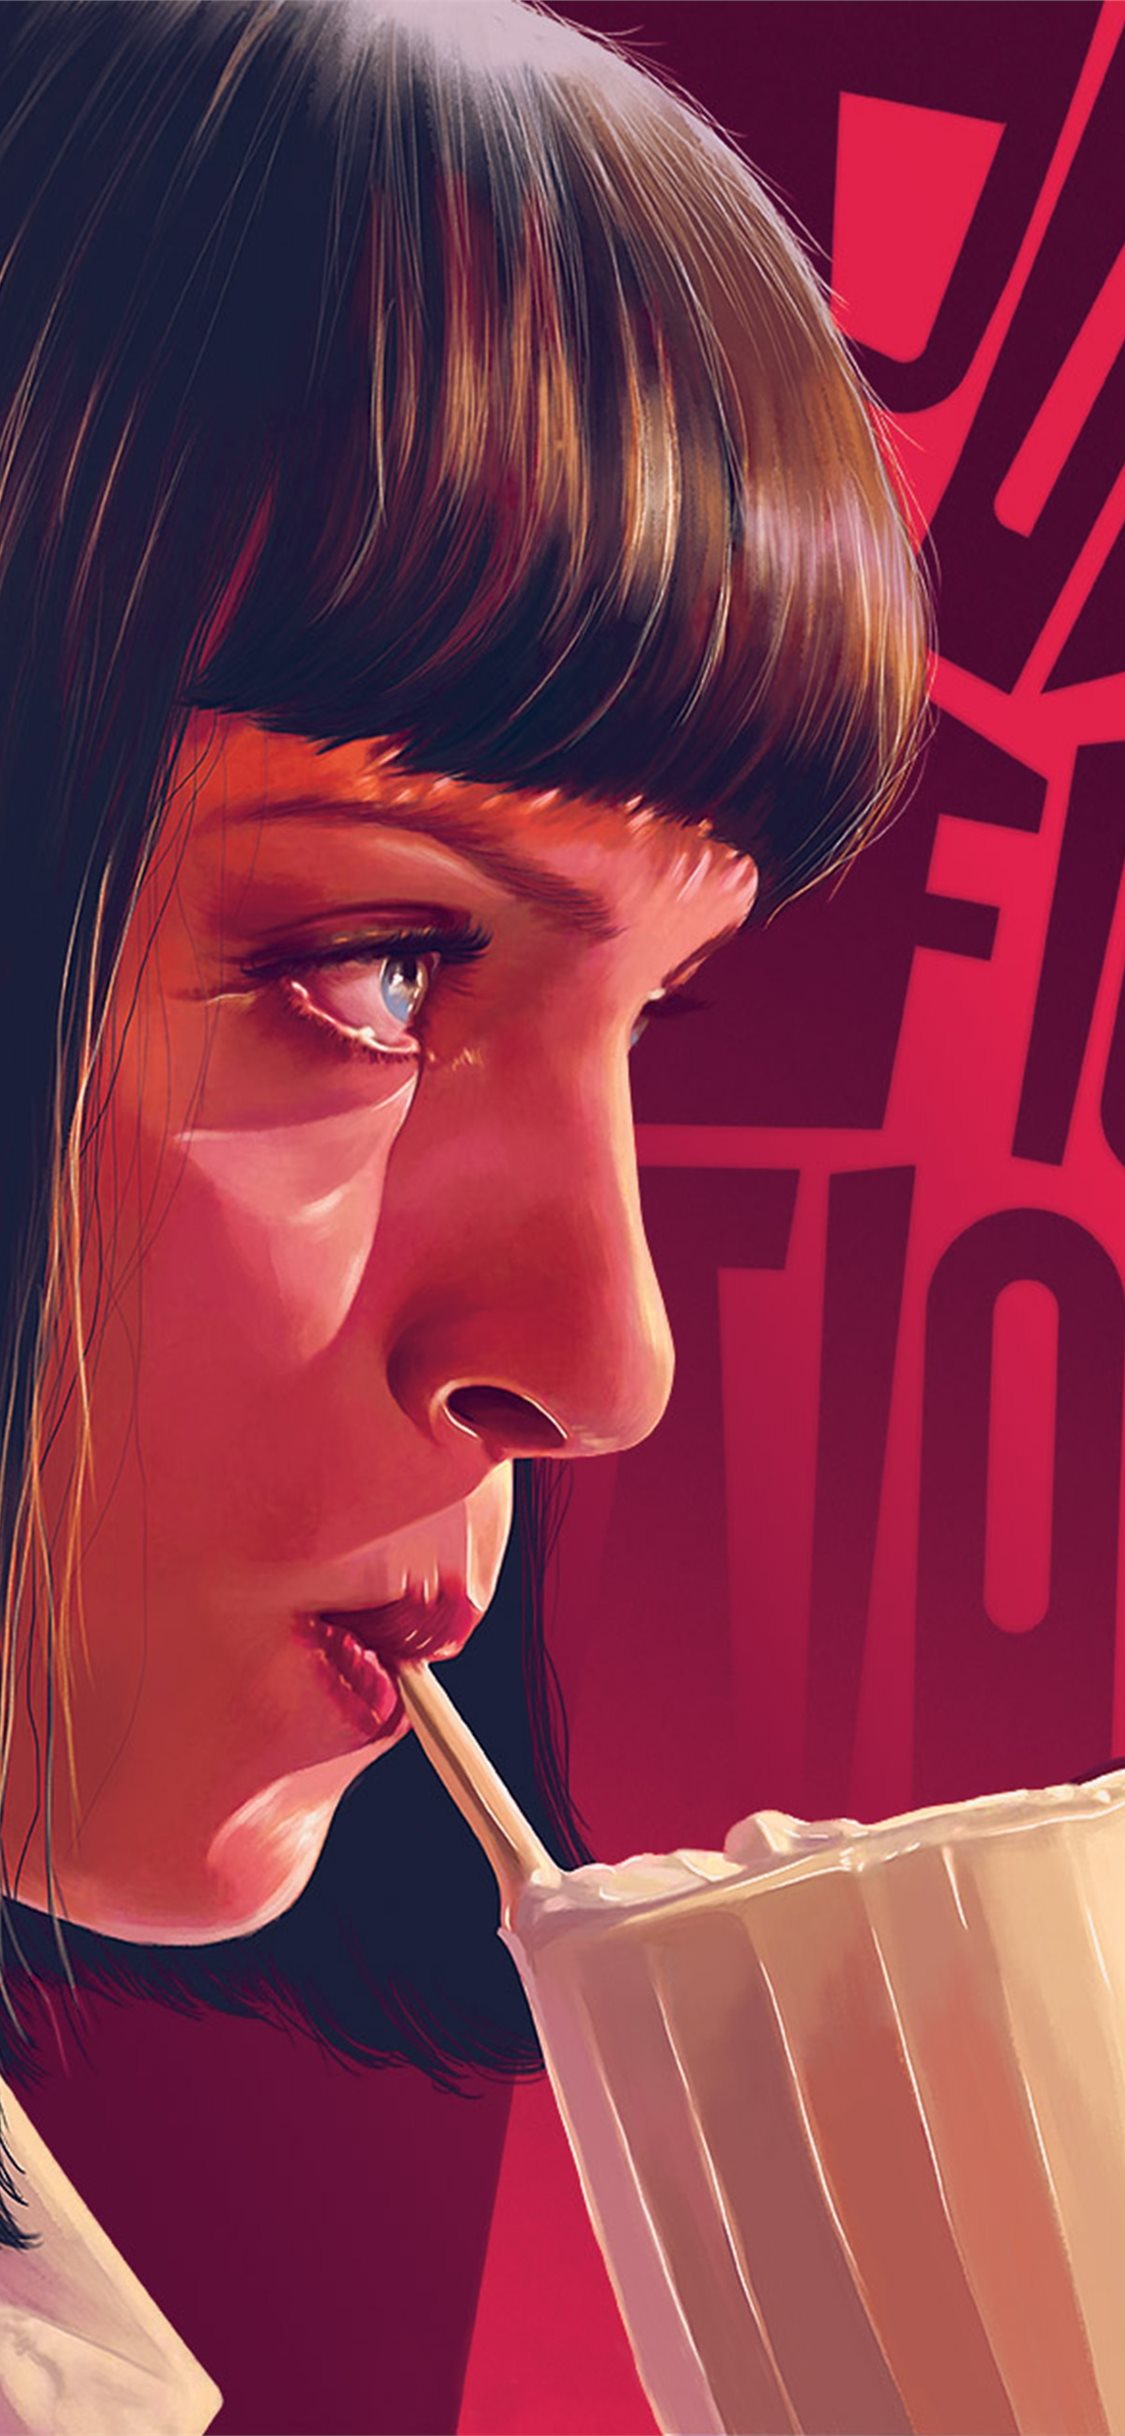 10 Top Pulp Fiction Iphone Wallpaper FULL HD 1080p For PC Desktop  Pulp  fiction Fiction Poster prints